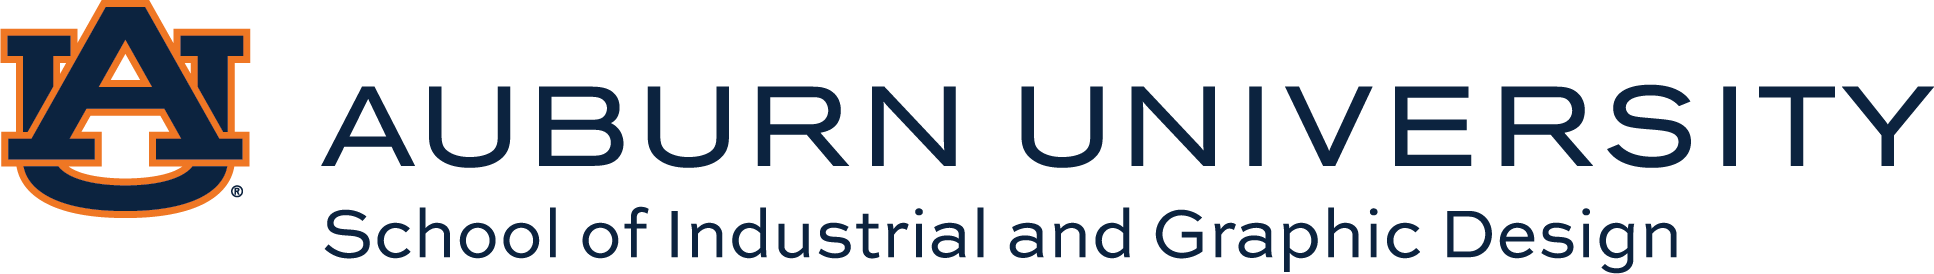 Auburn University, School of Industrial and Graphic Design Logo